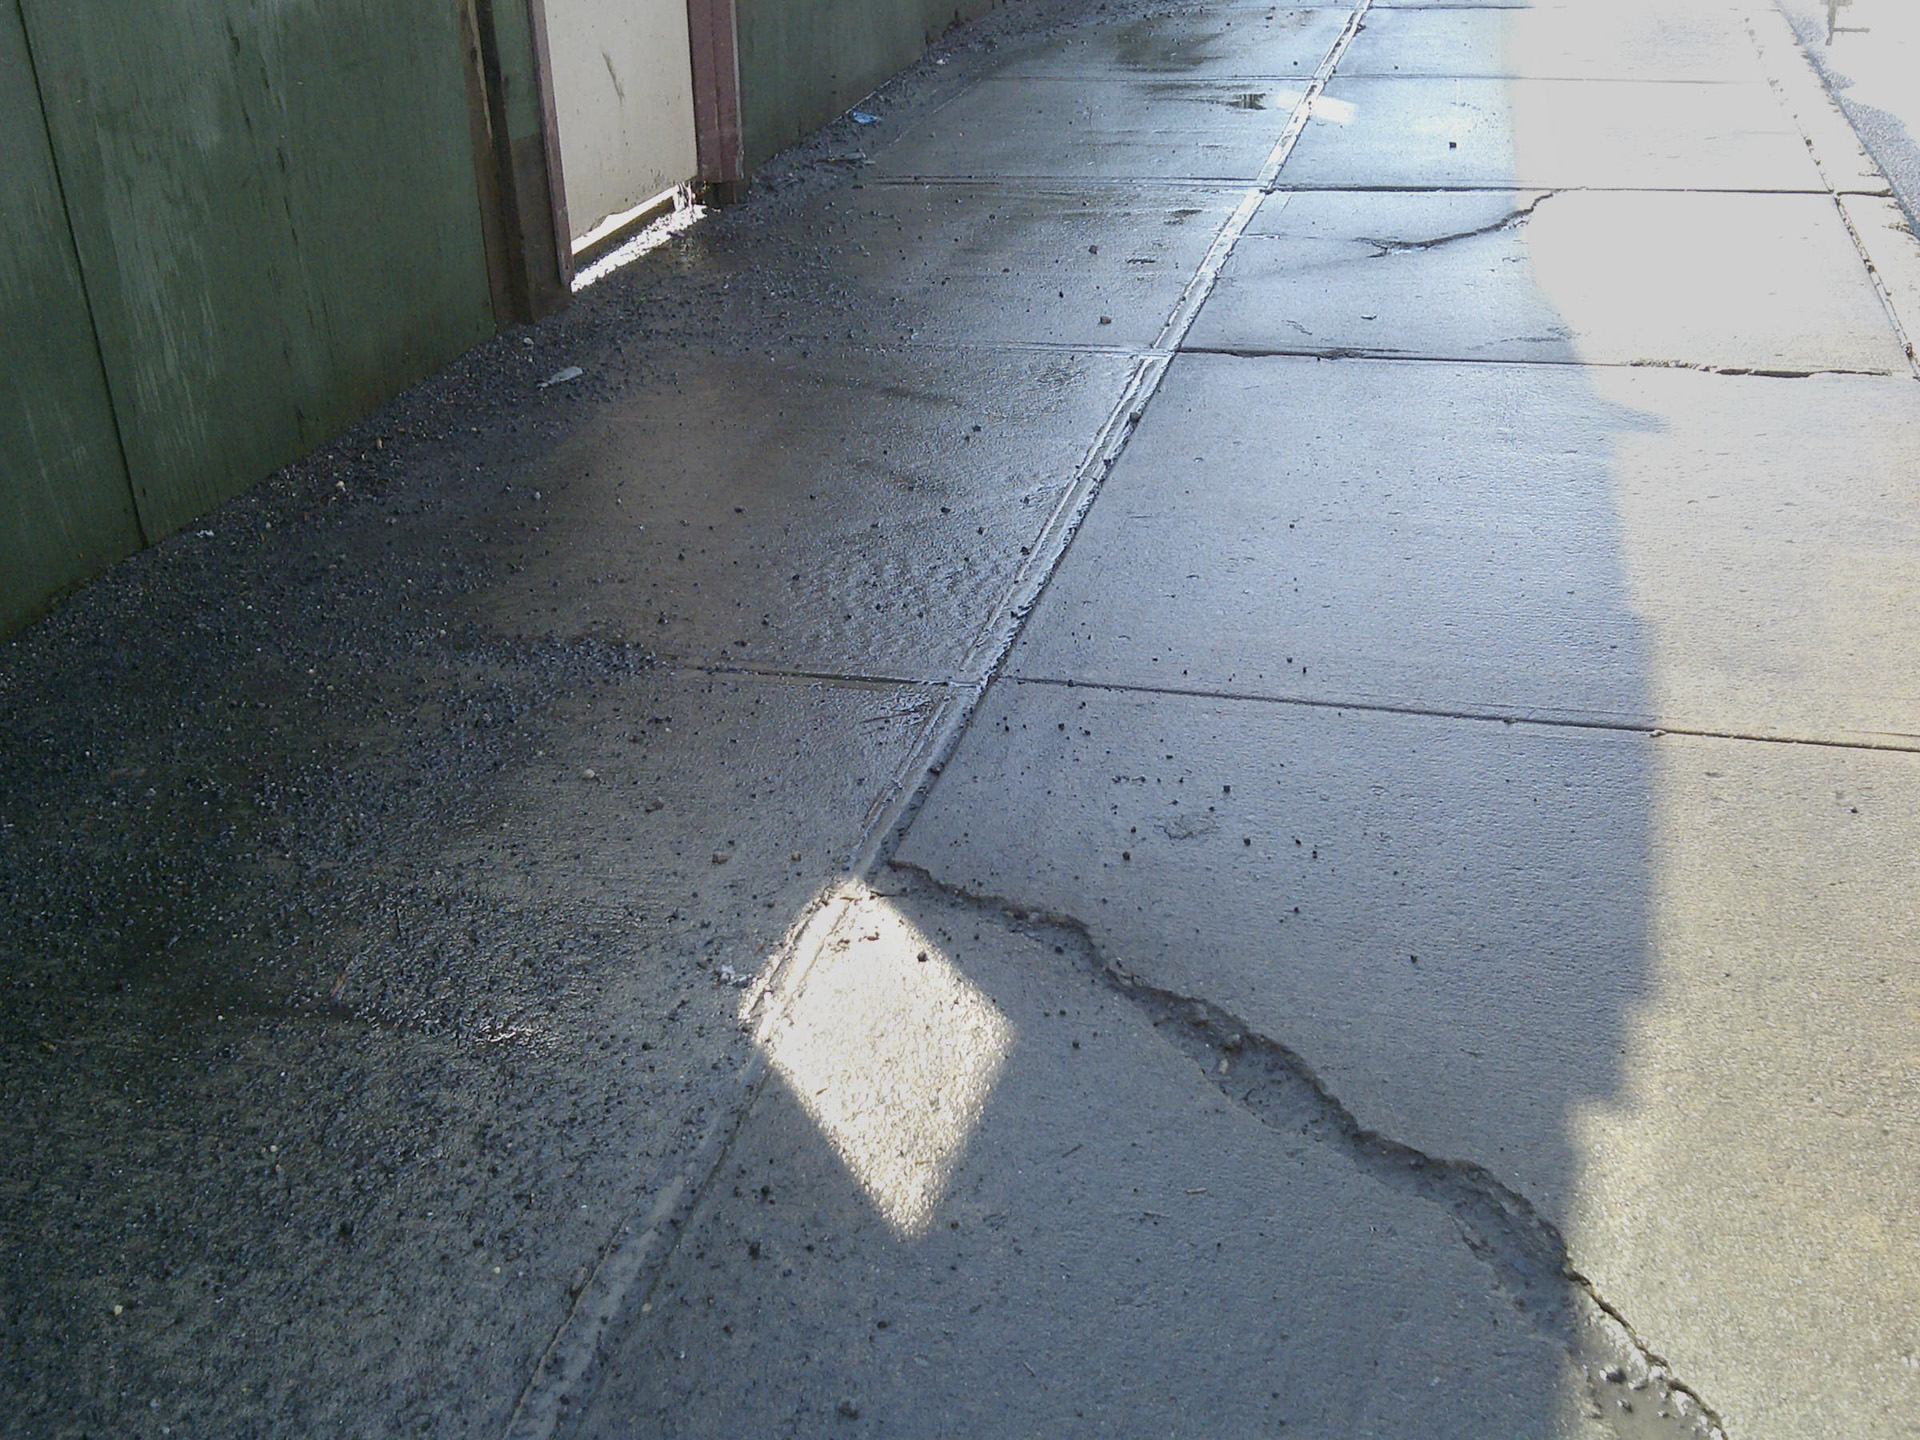 exterior scene with broken concrete pavement